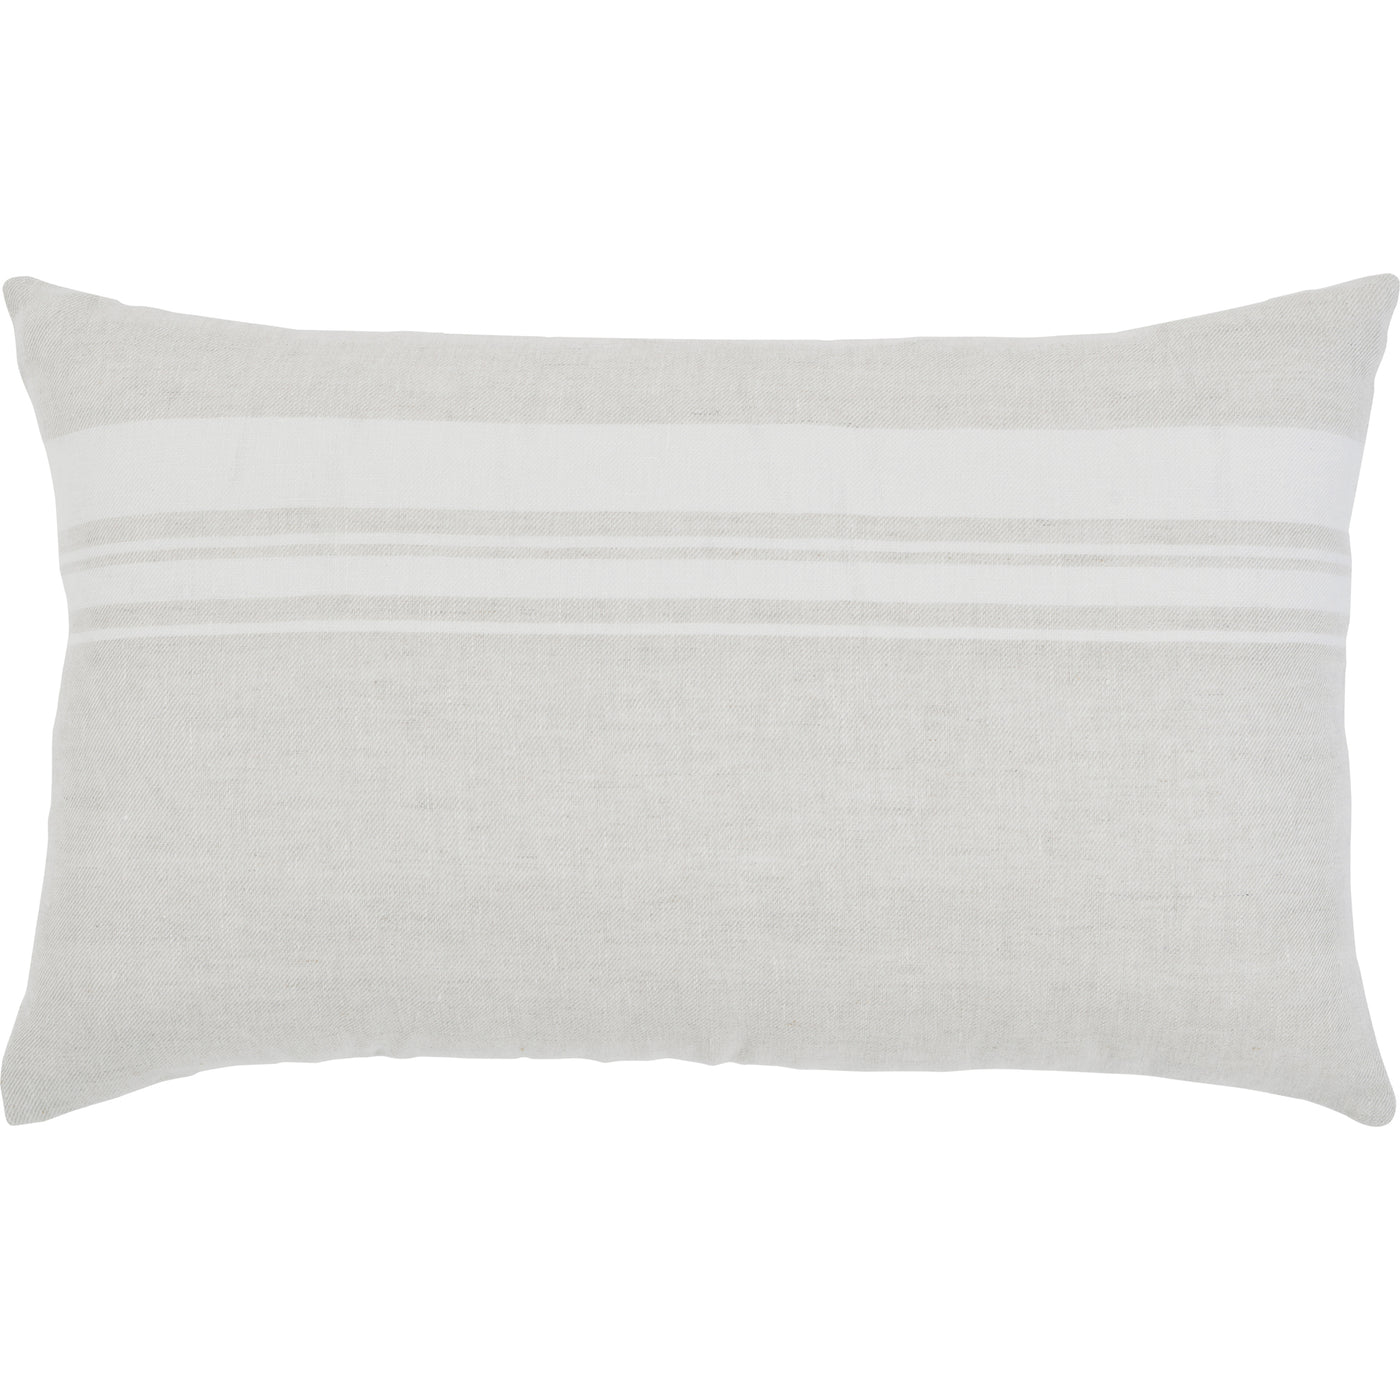 Reese Kidney Decorative Pillow